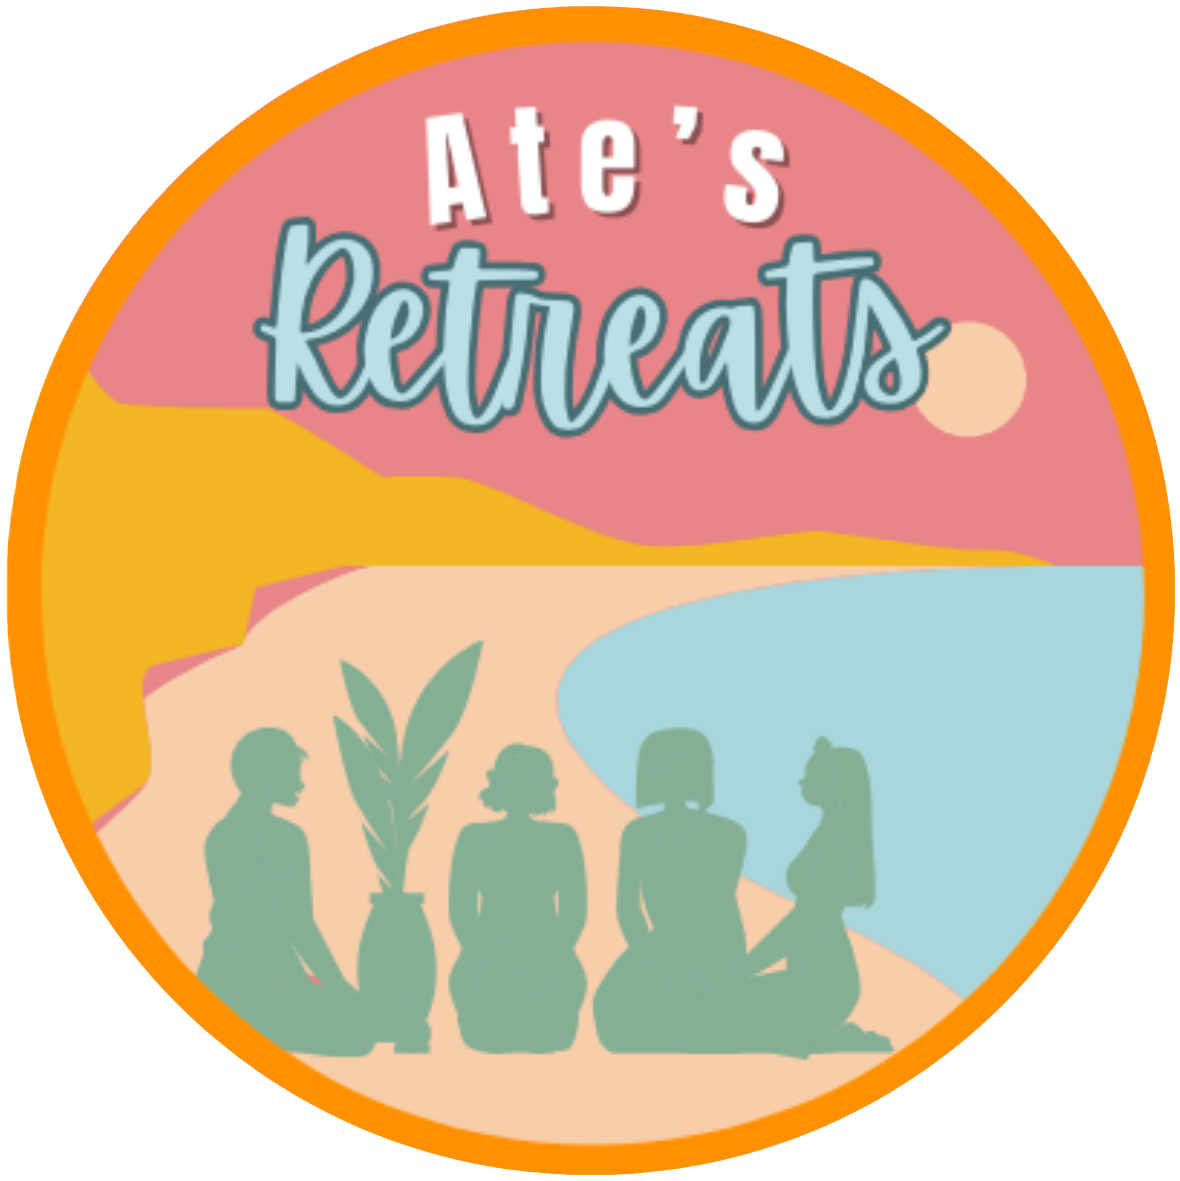 Ate's Retreats